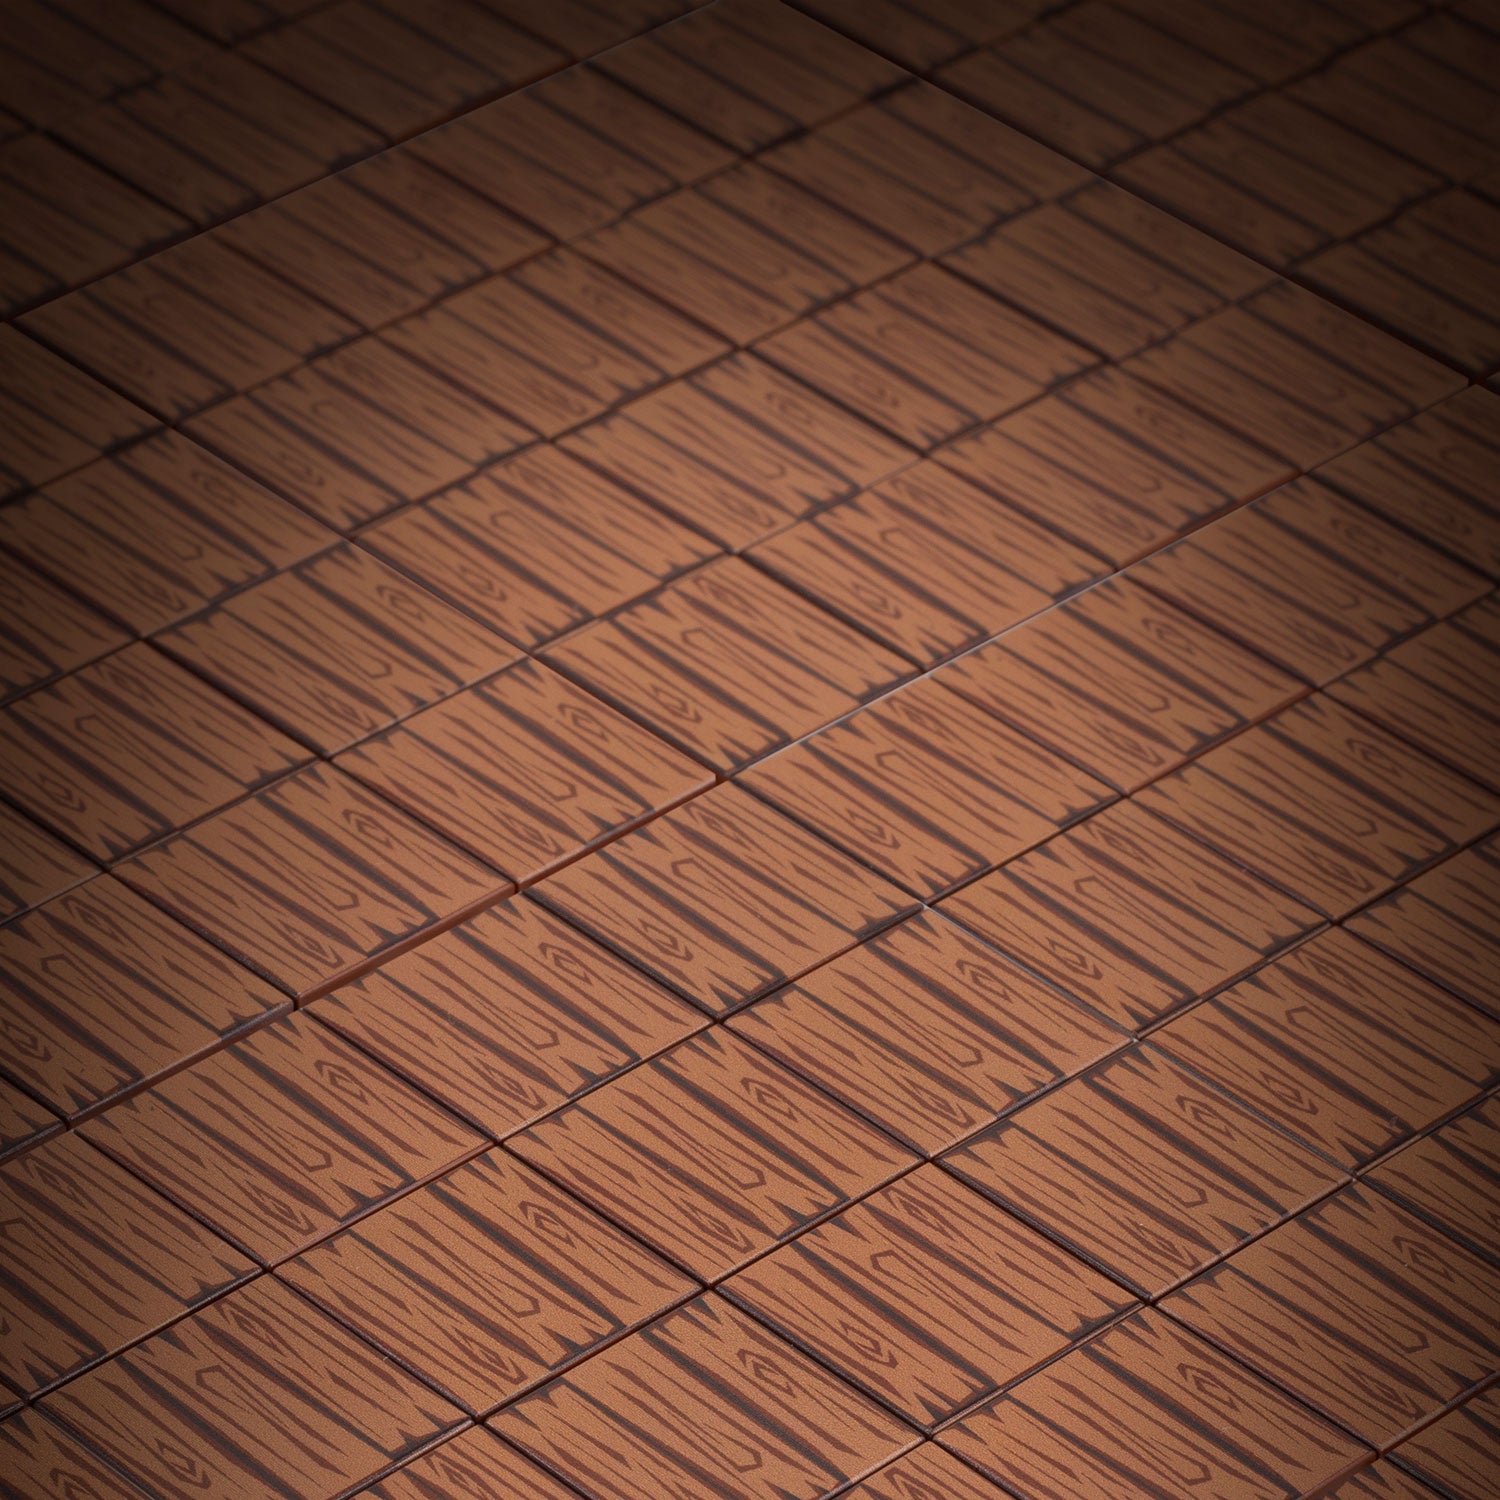 Custom LEGO Hardwood Floor Tiles